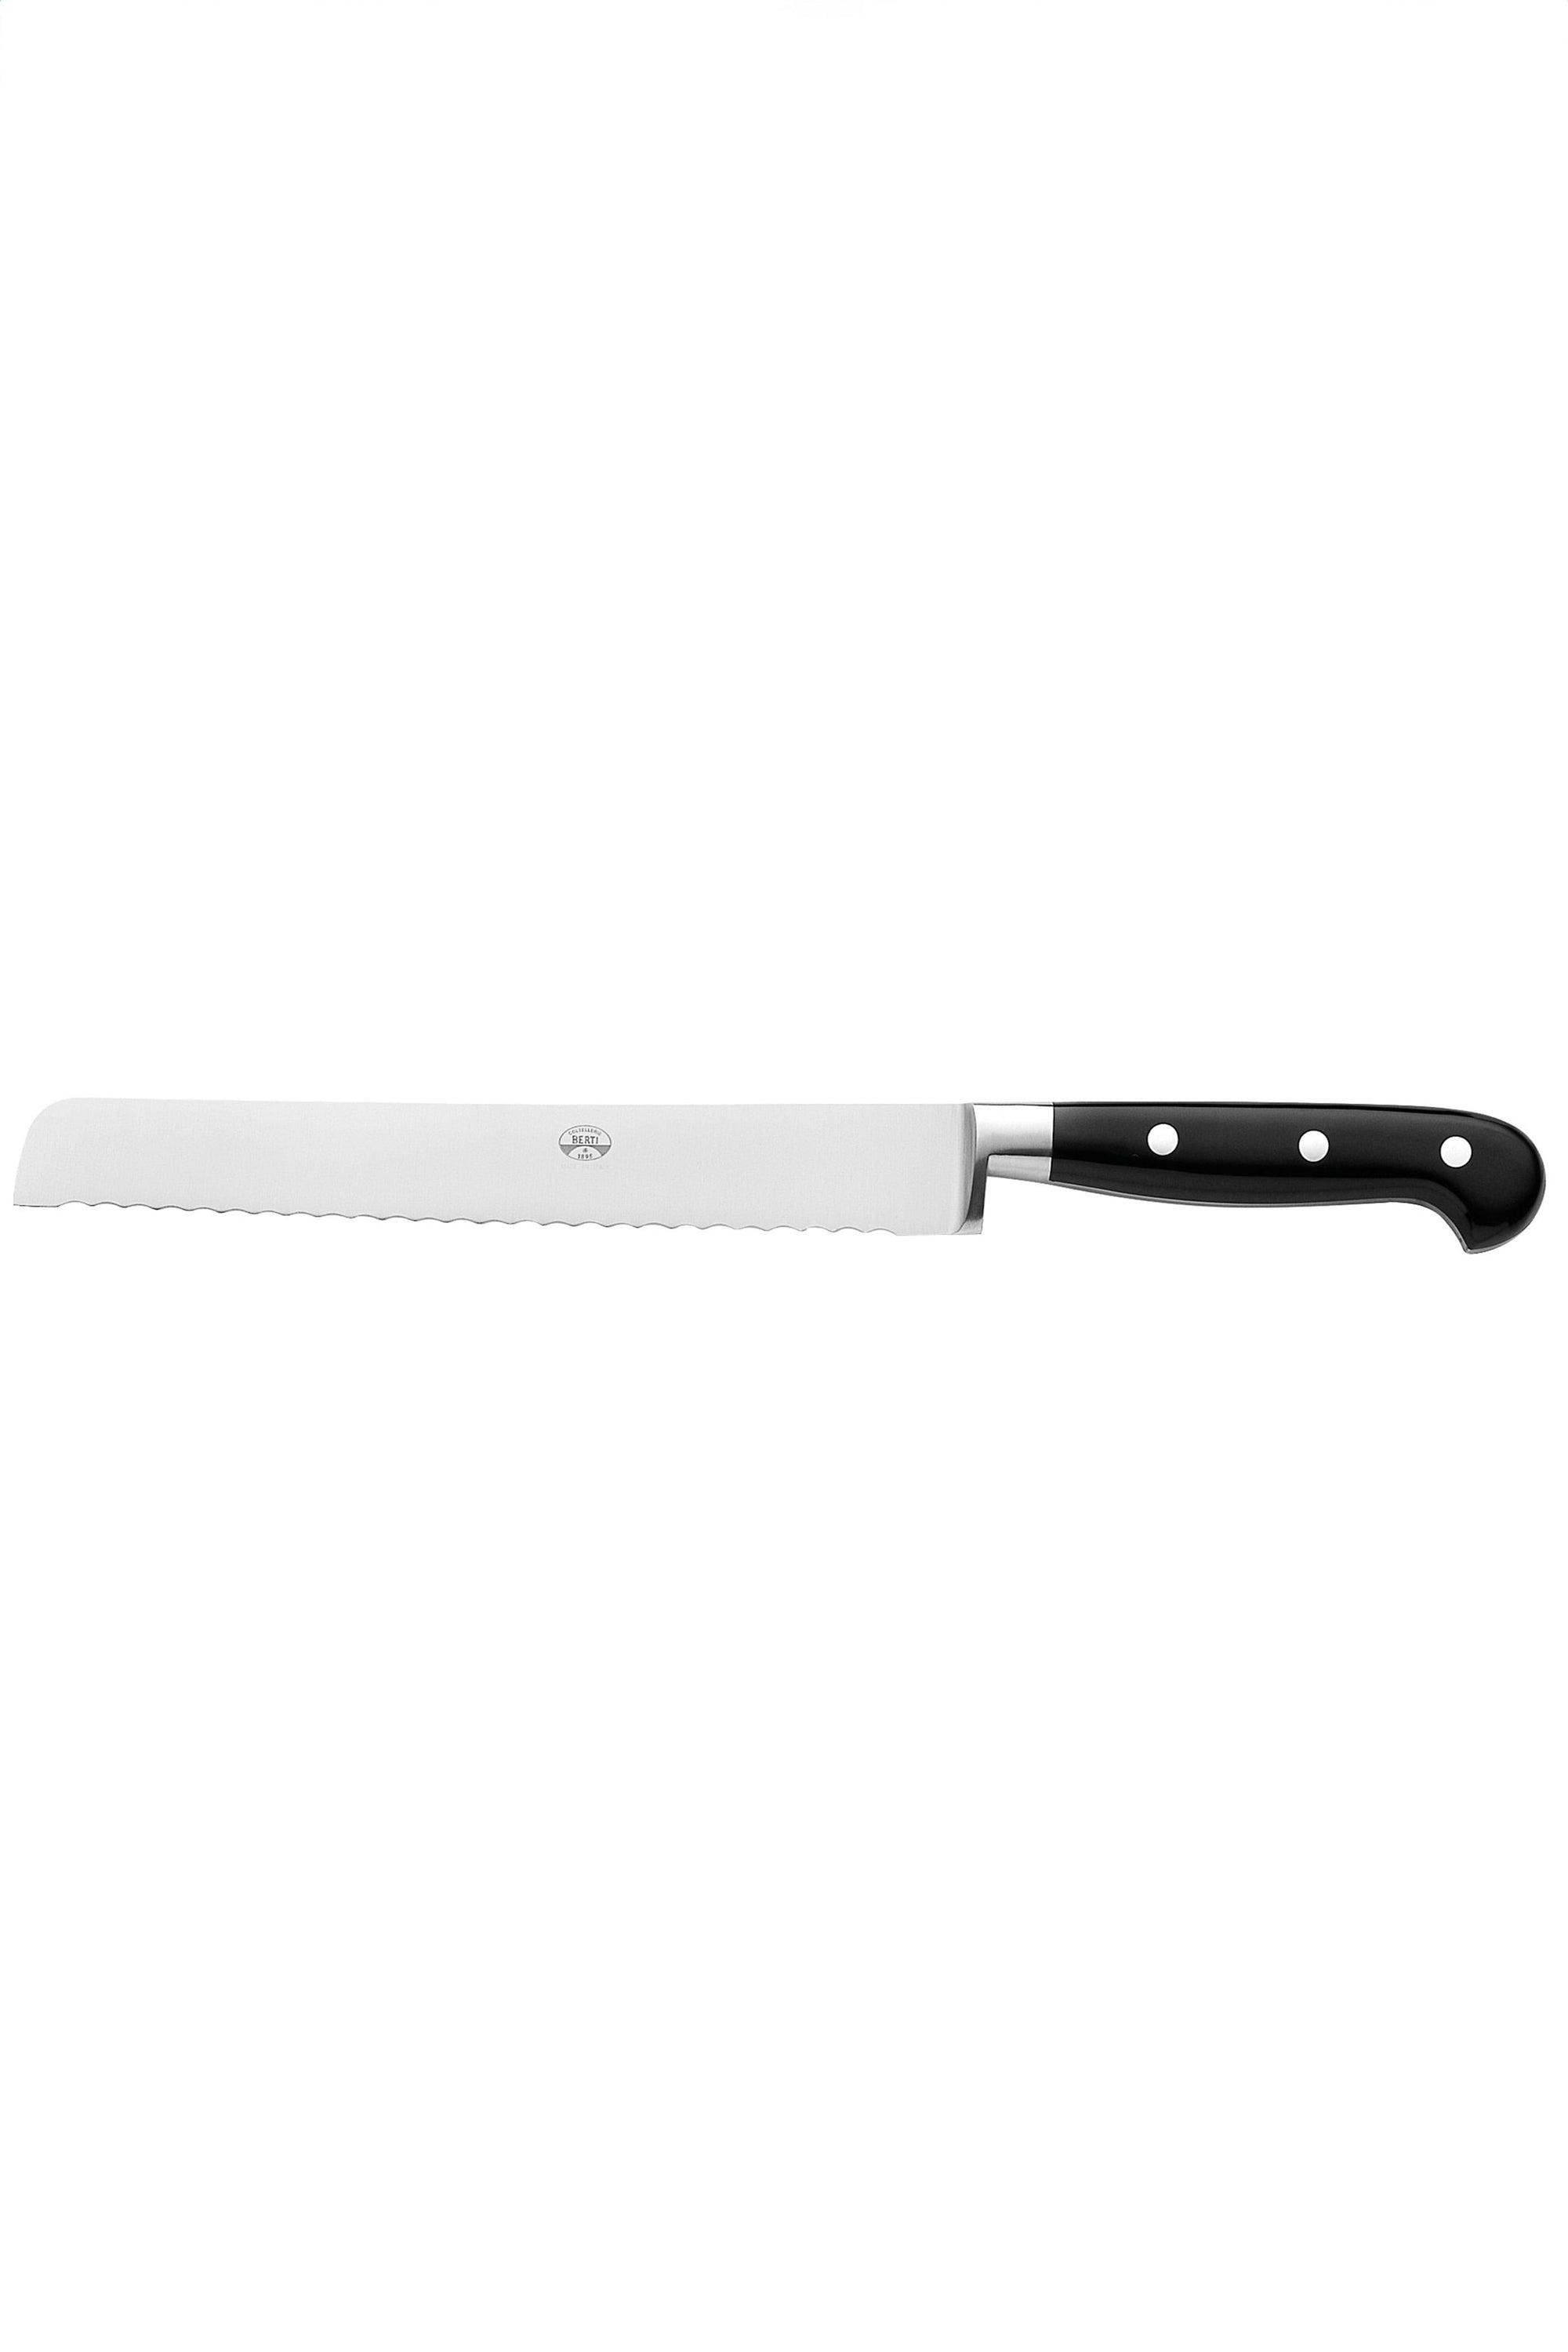 Coltellerie Berti Bread Knife